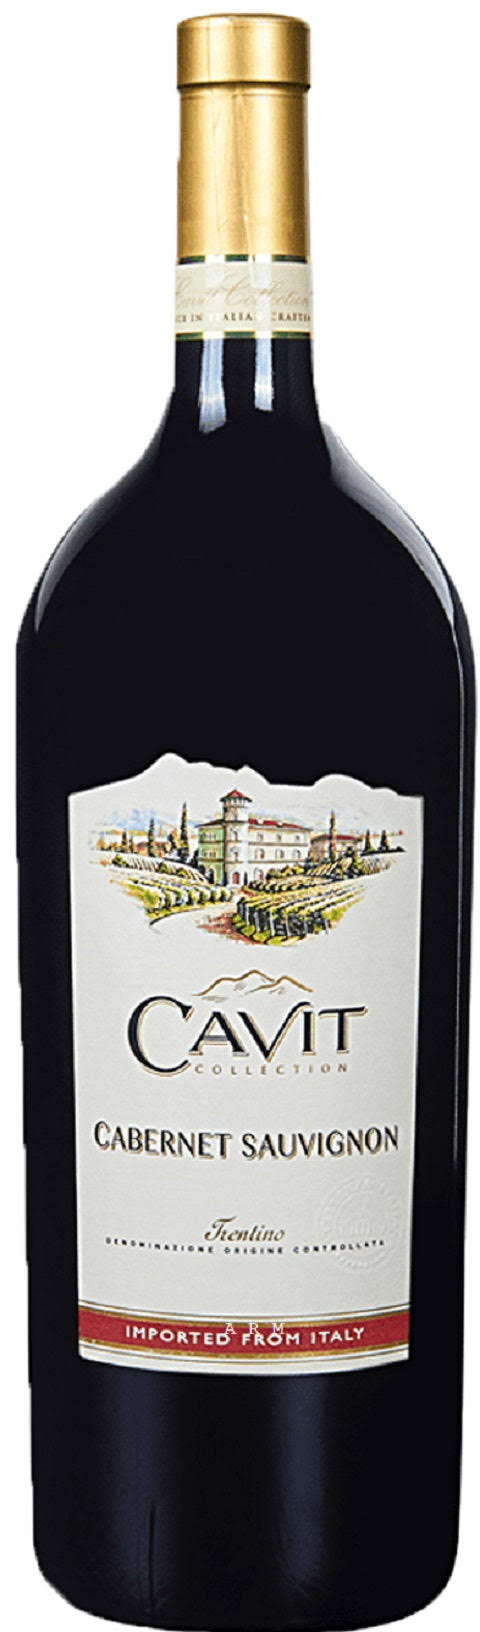 Cavit Collection Cabernet Sauvignon